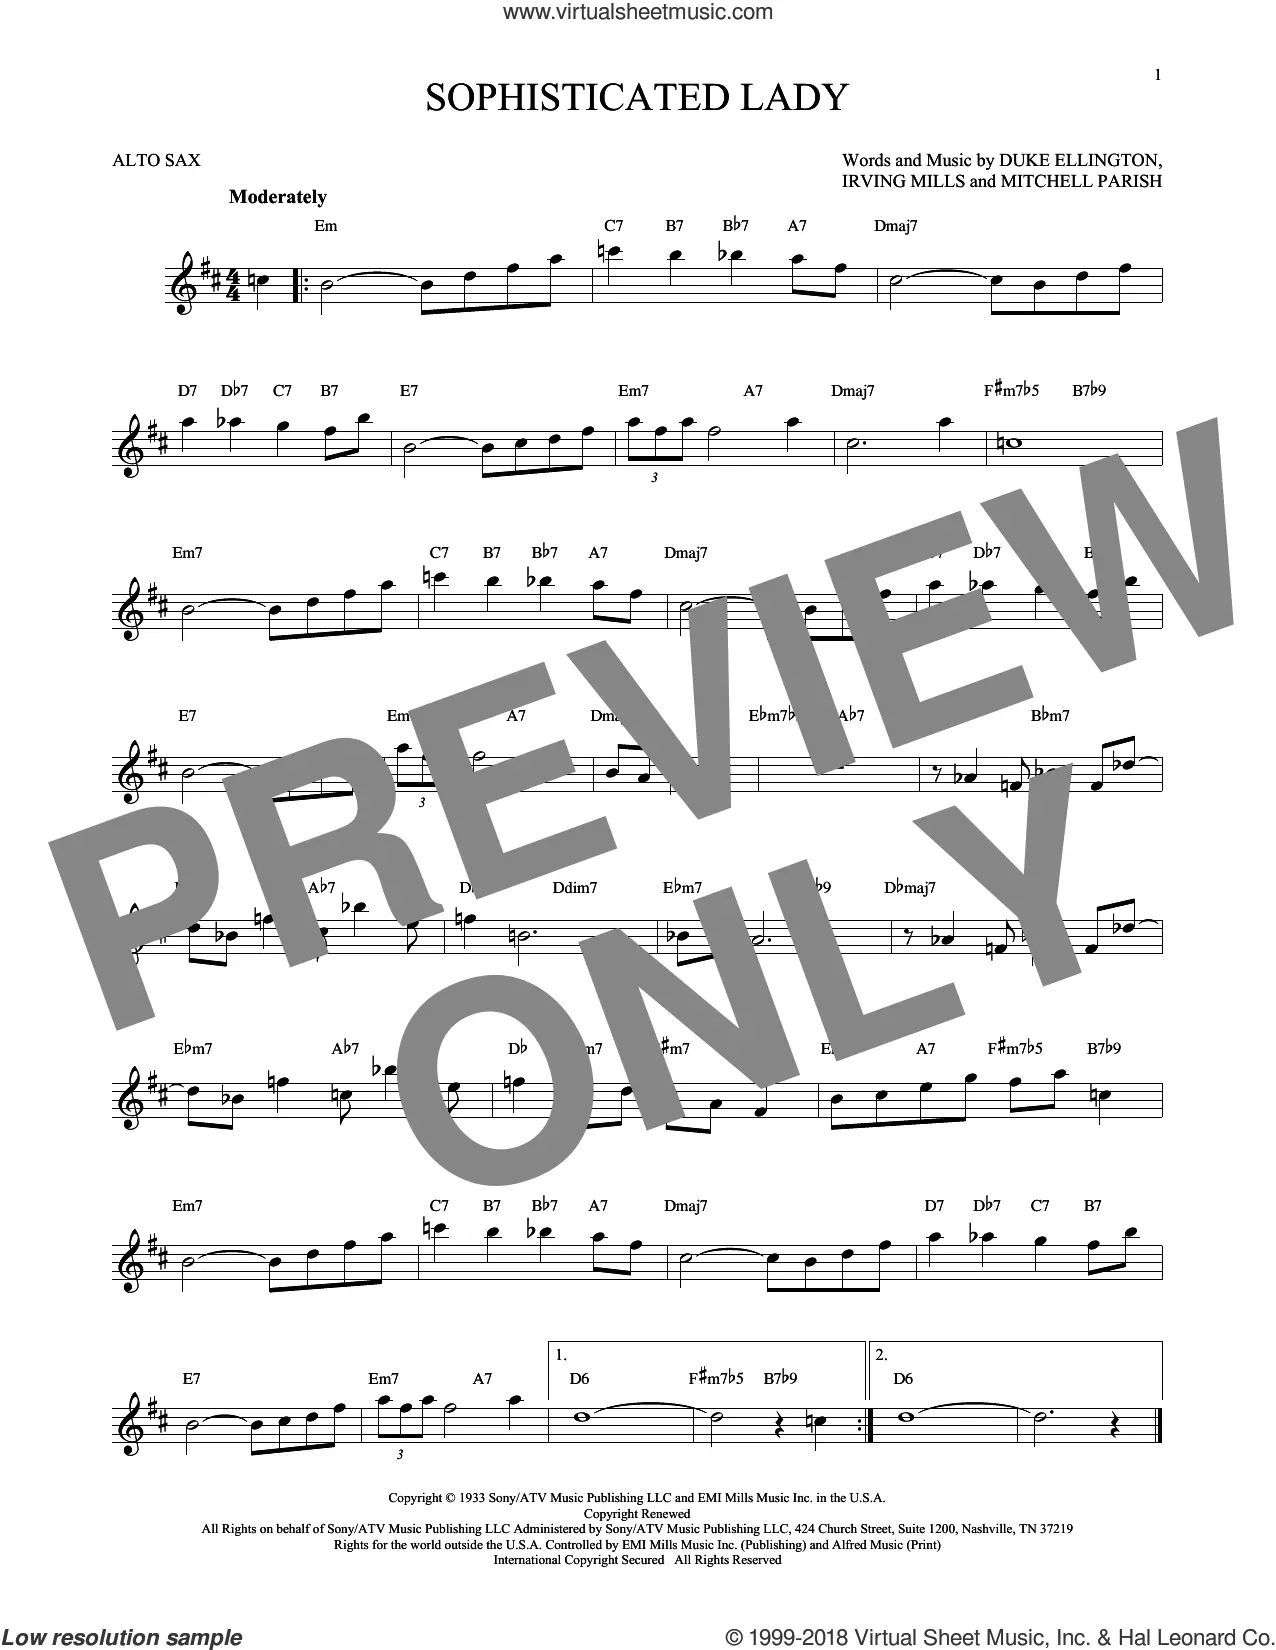 Jazz to the World - E-flat Alto Saxophone 2" Sheet Music for Jazz  Ensemble - Sheet Music Now